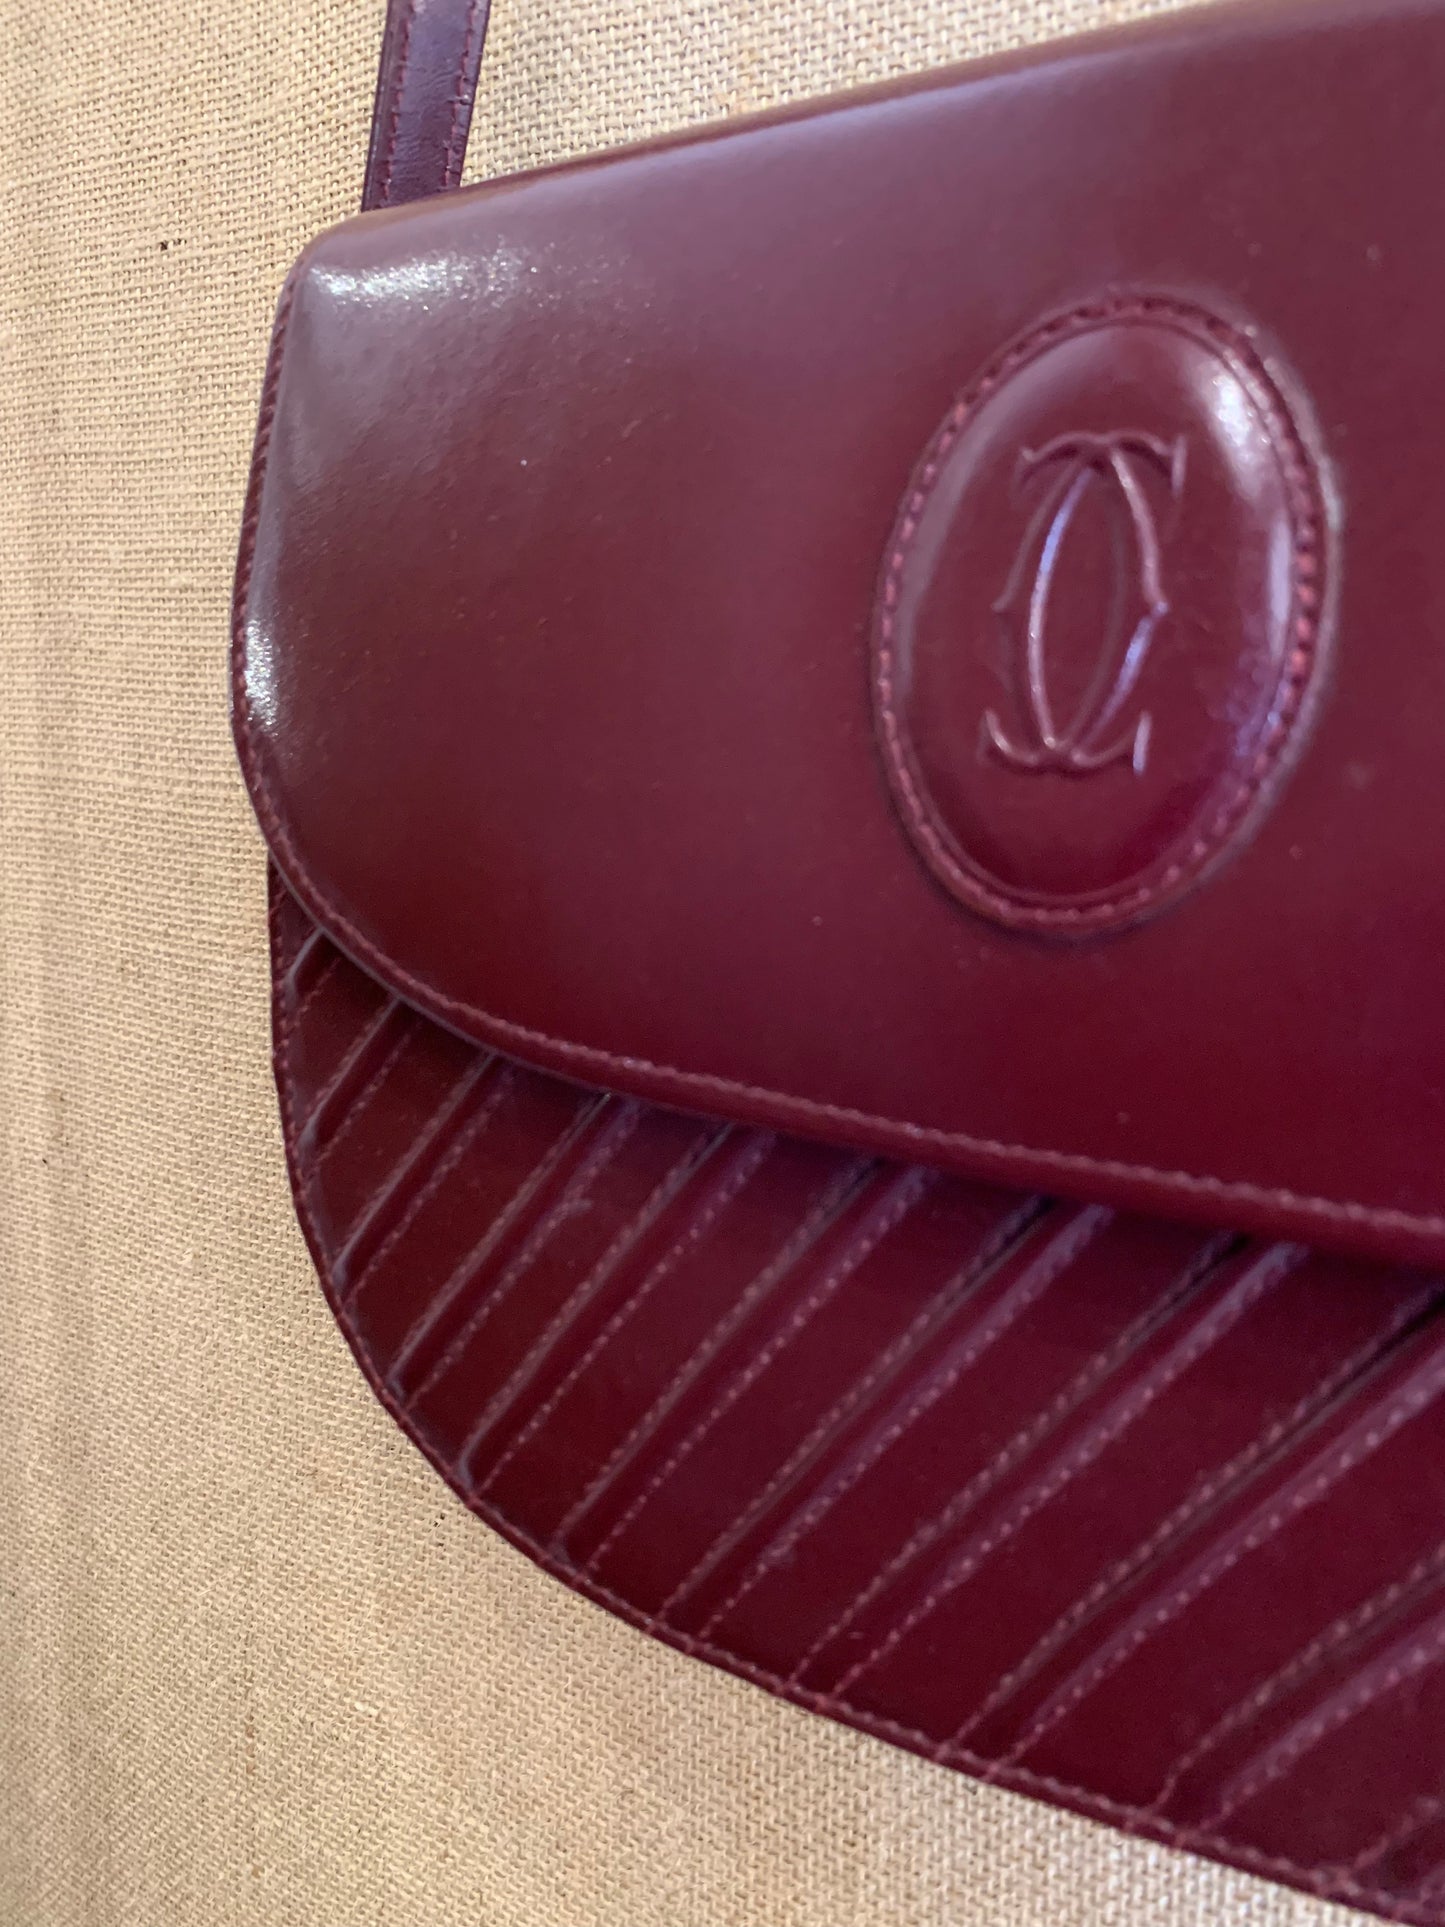 Vintage Cartier Cross Body Burgundy Leather Bag